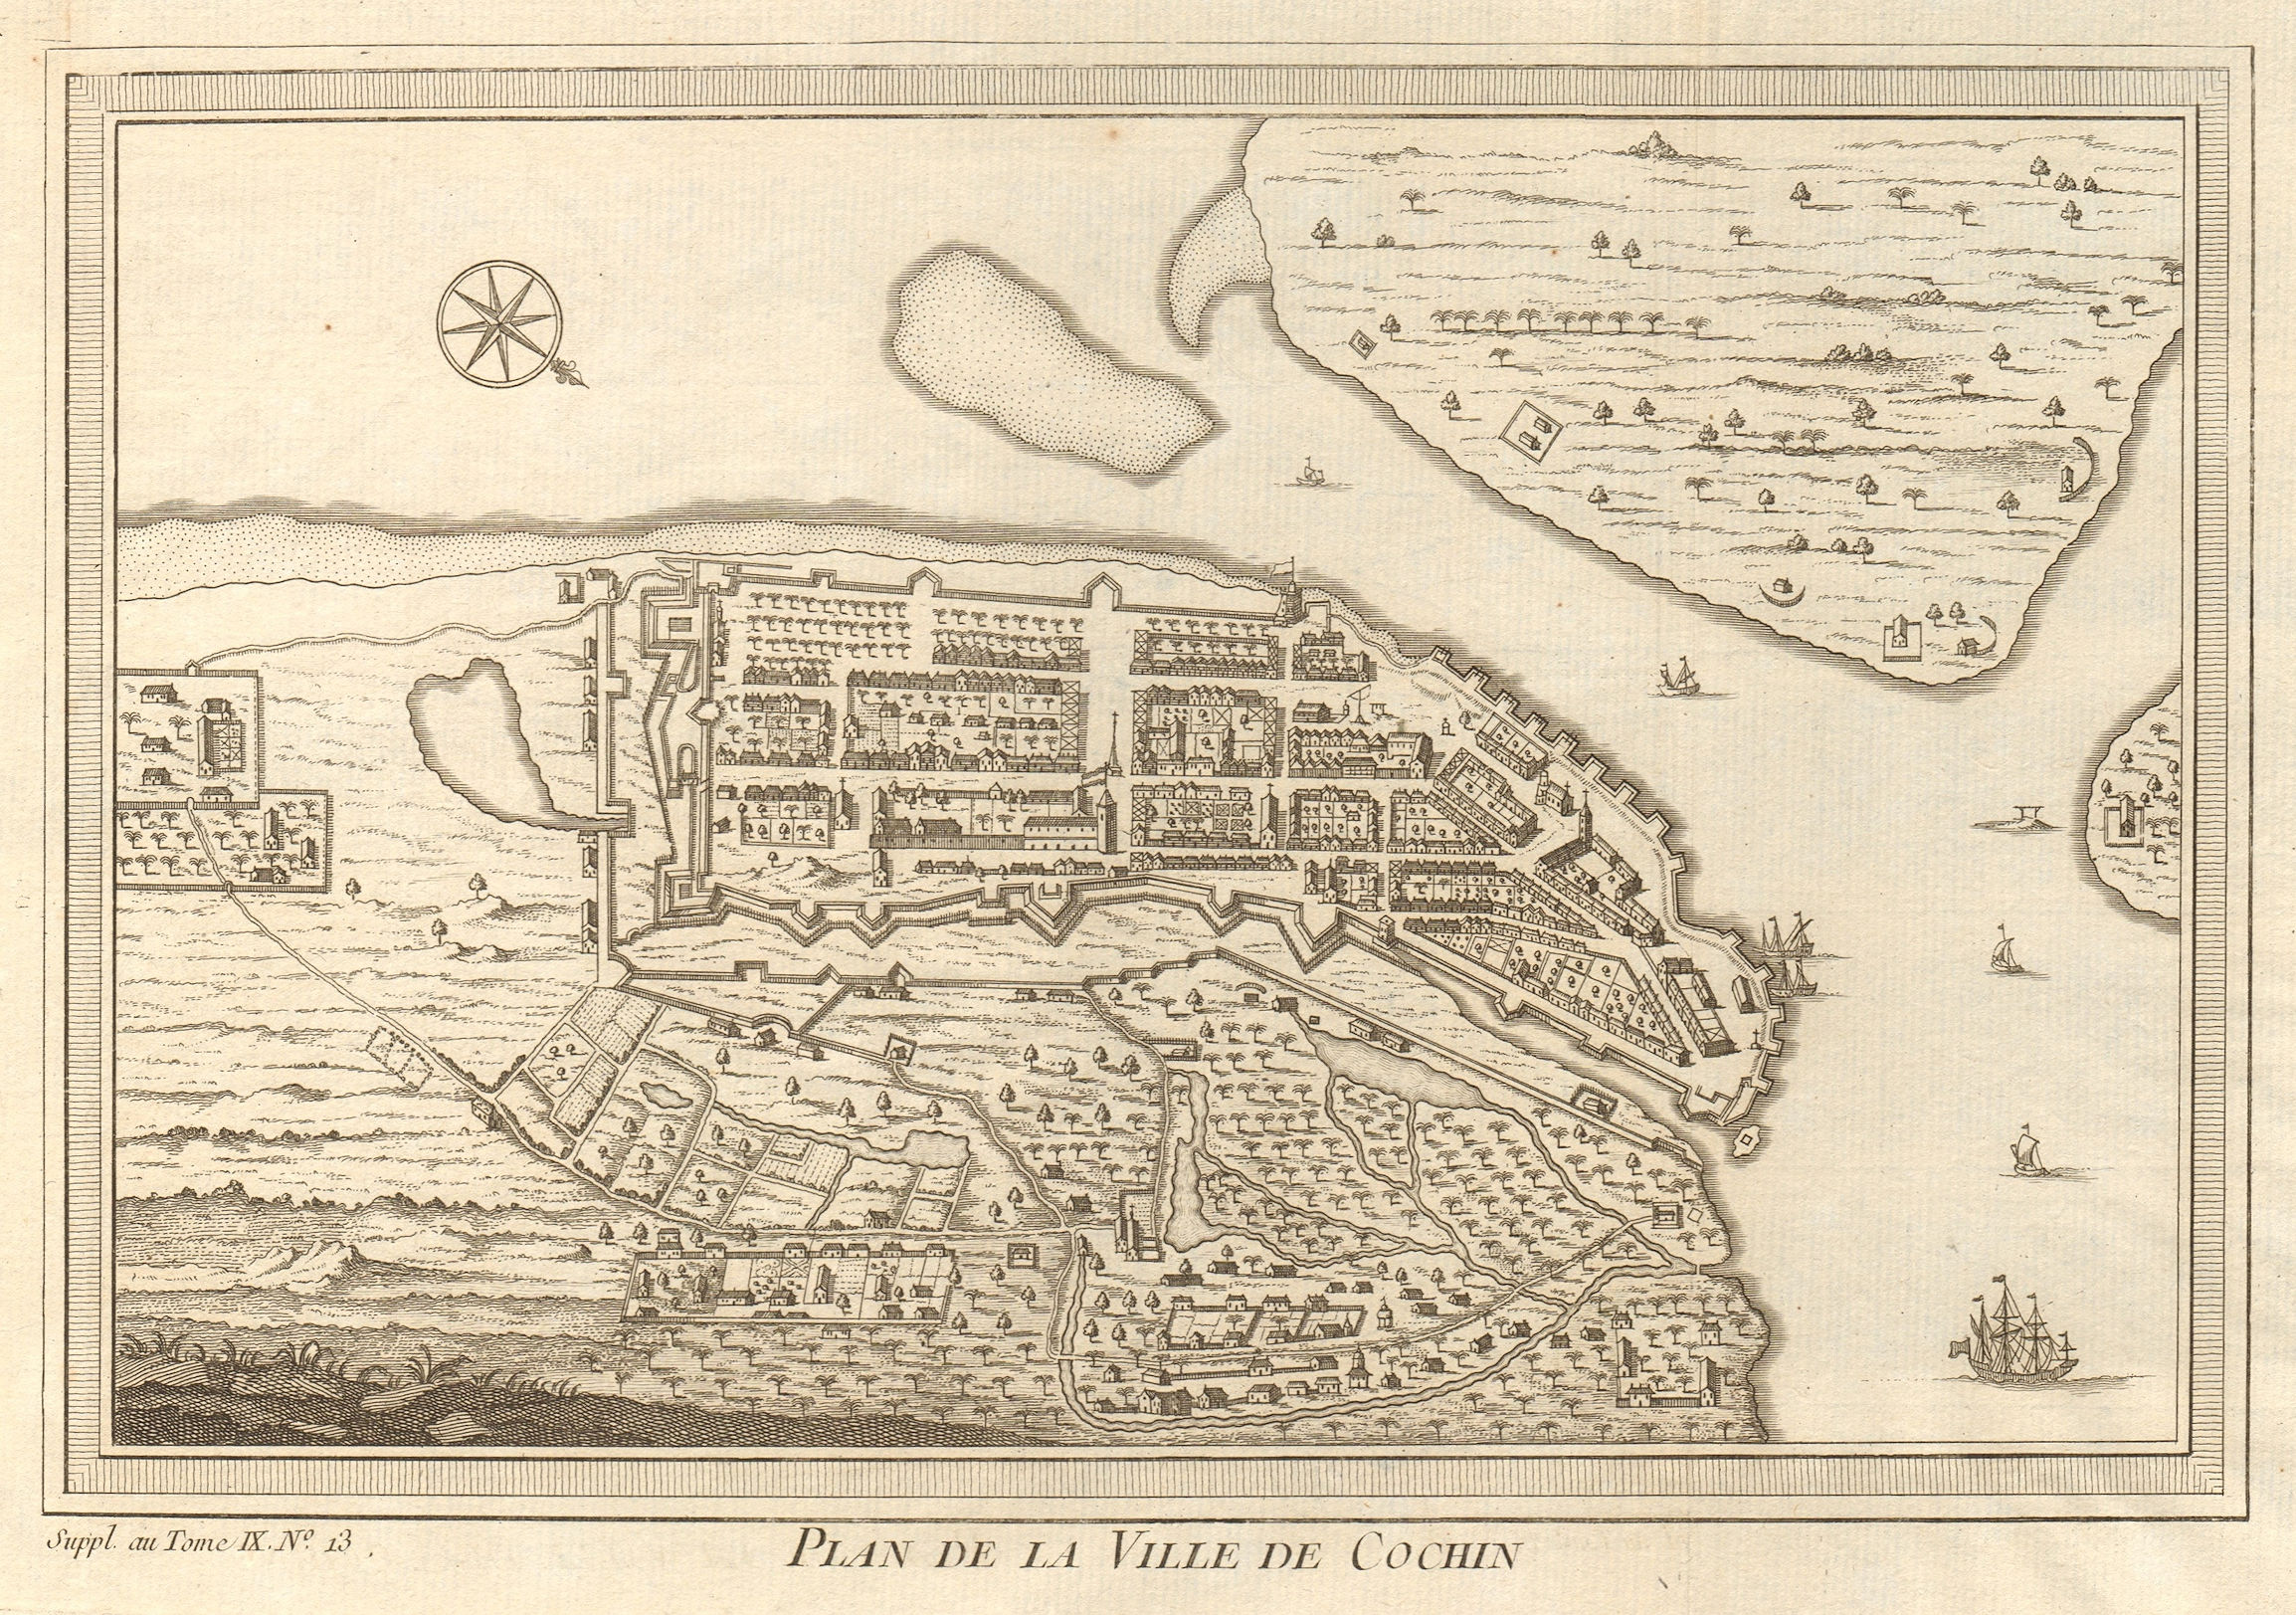 Associate Product 'Ville de Cochin'. Kochi town city plan, Kerala, India. BELLIN 1761 old map